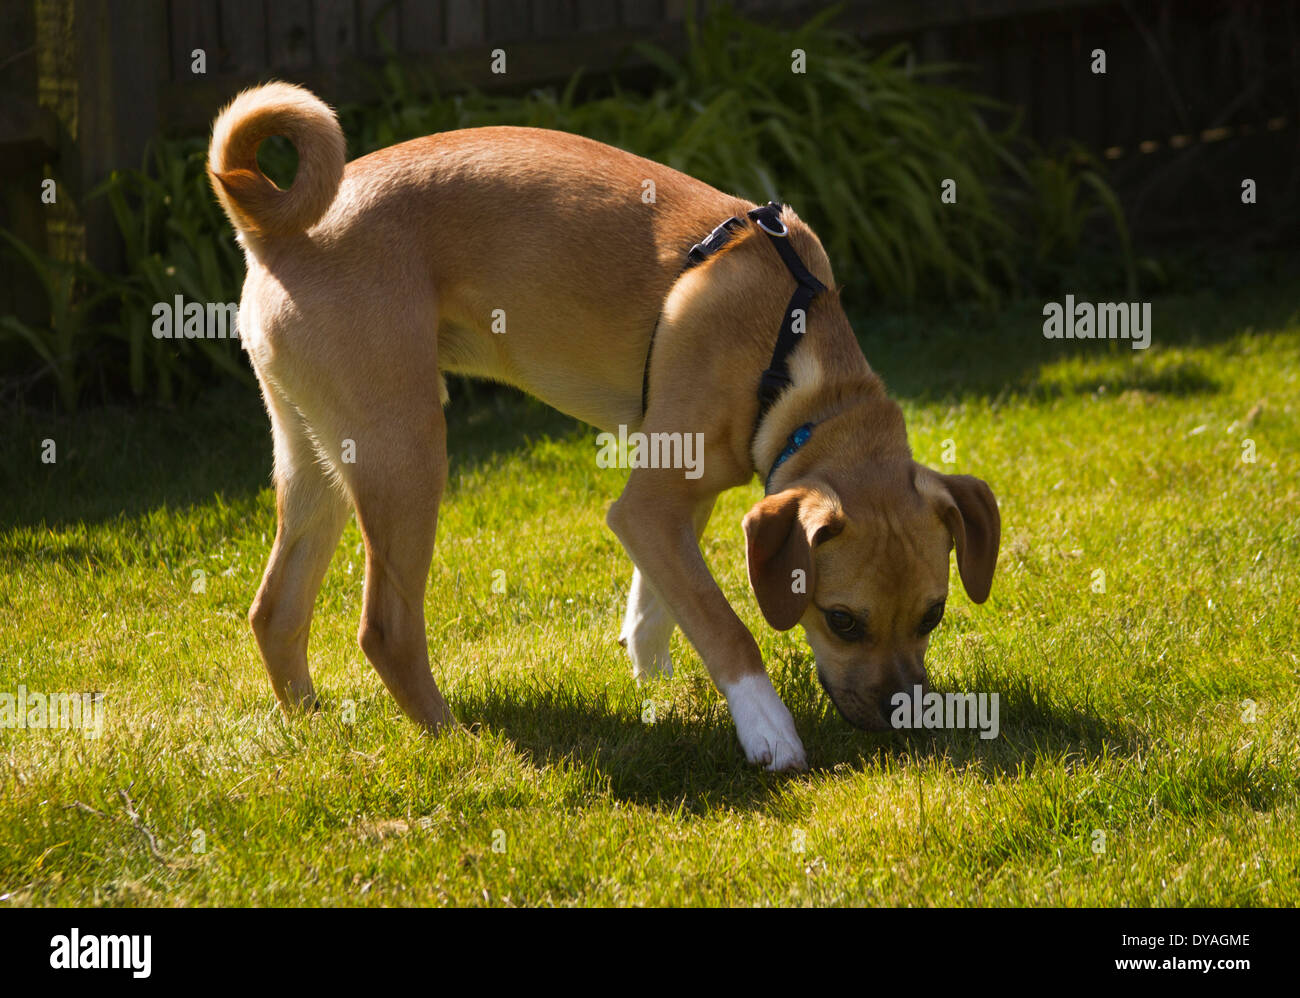 puggle dog in in suburban garden Stock Photo